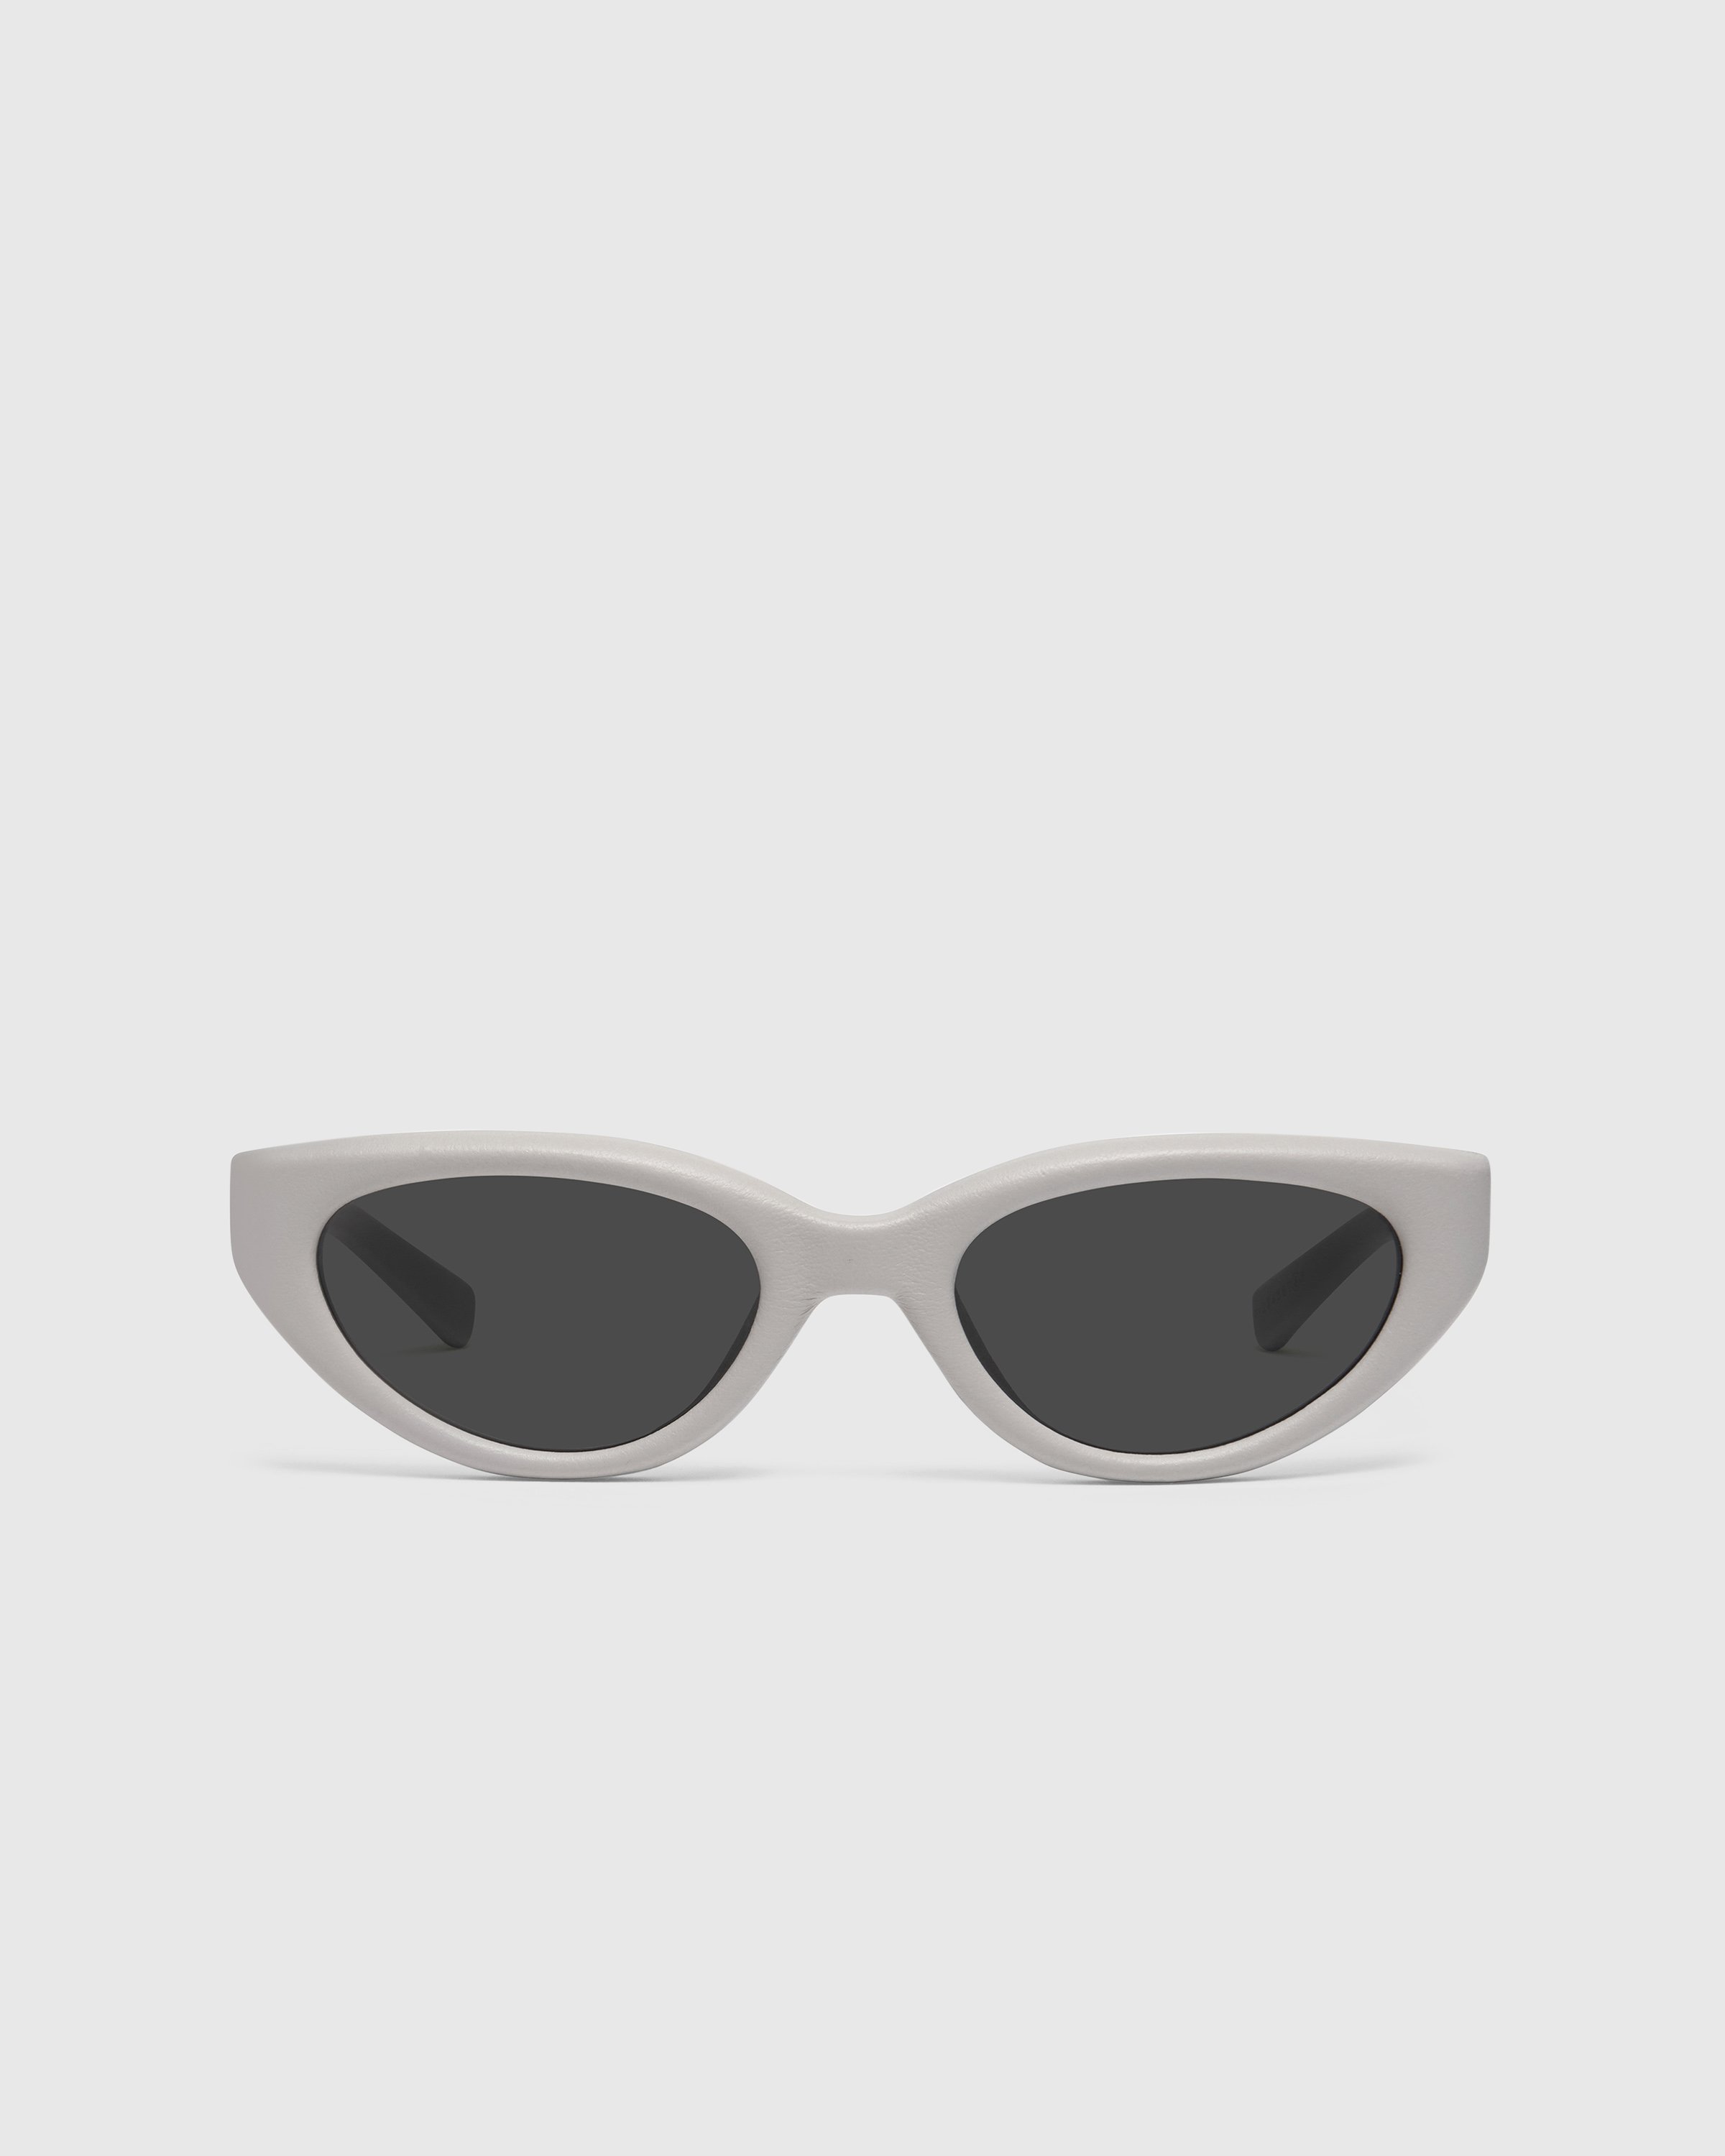 Maison Margiela x Gentle Monster - Sunglasses MM108 LEATHER-LIV1 - Accessories - White - Image 1